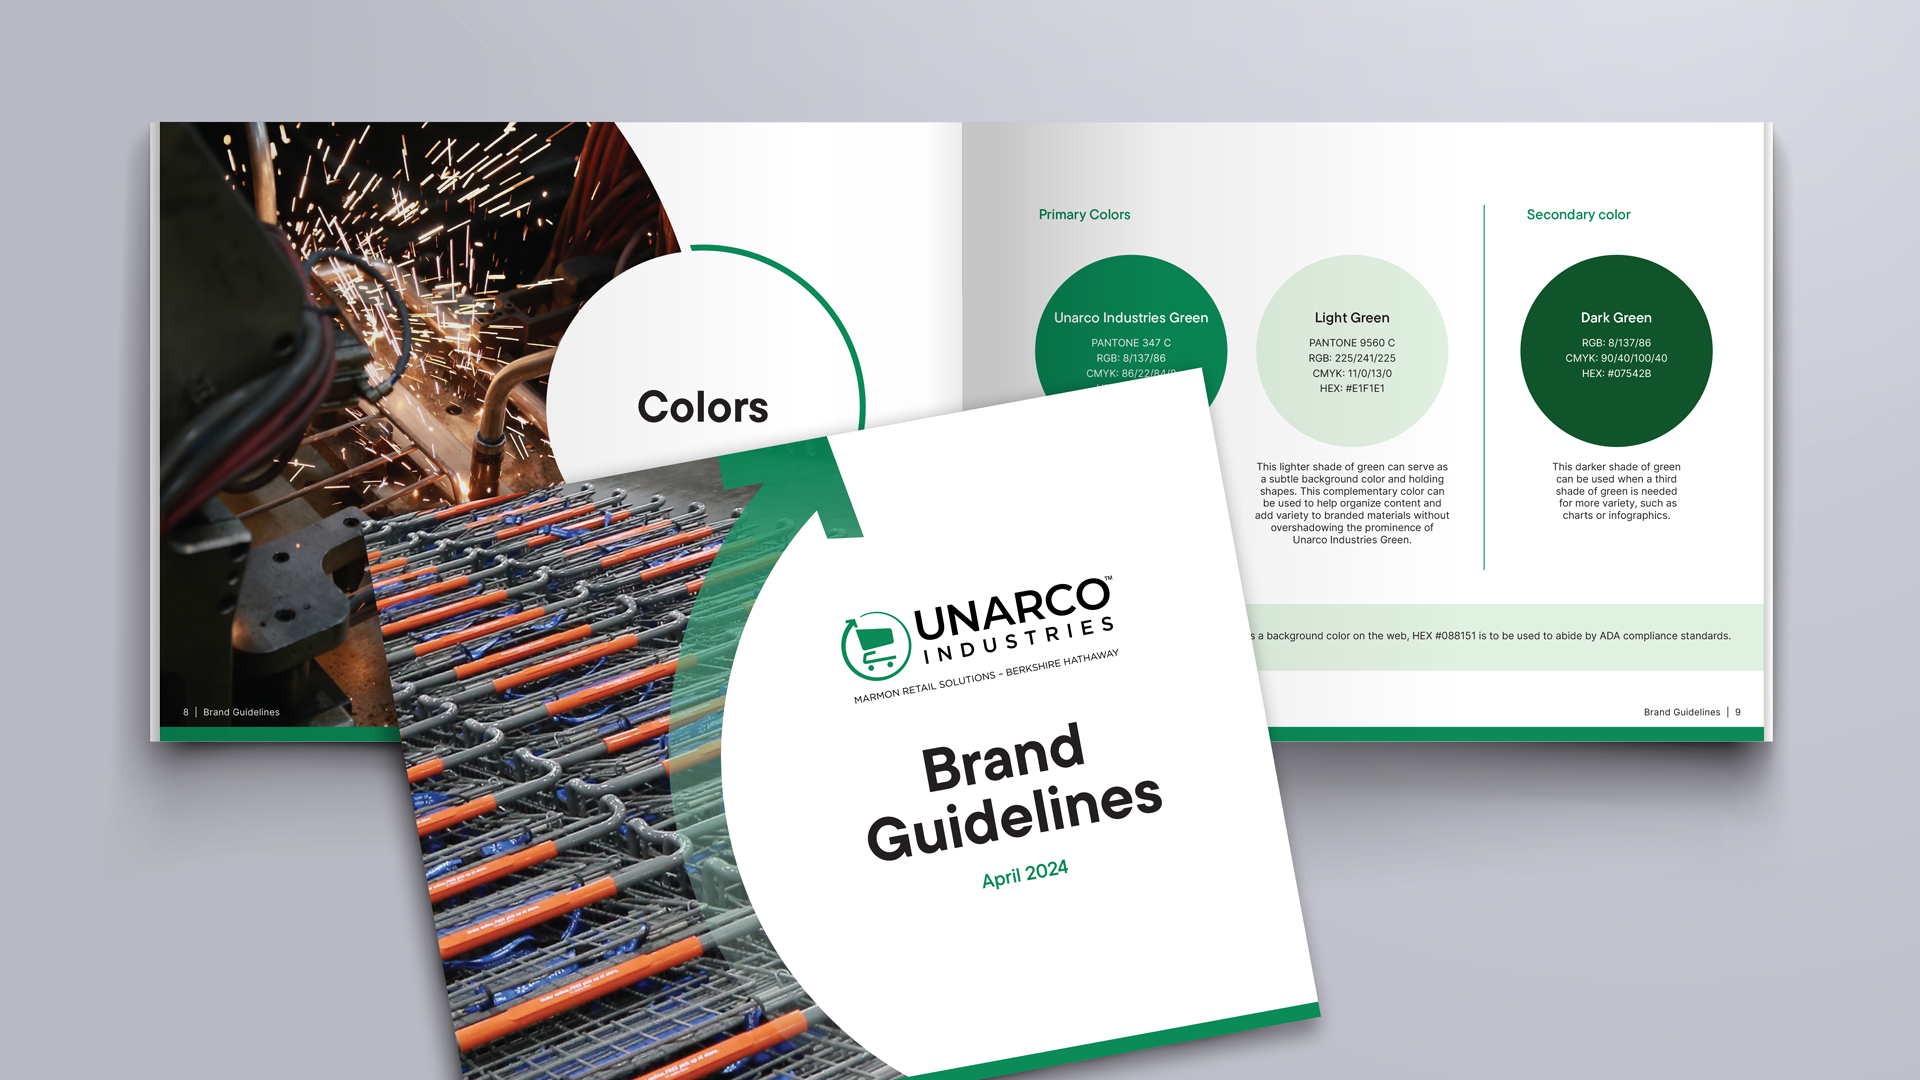 Unarco Industries brand guidelines